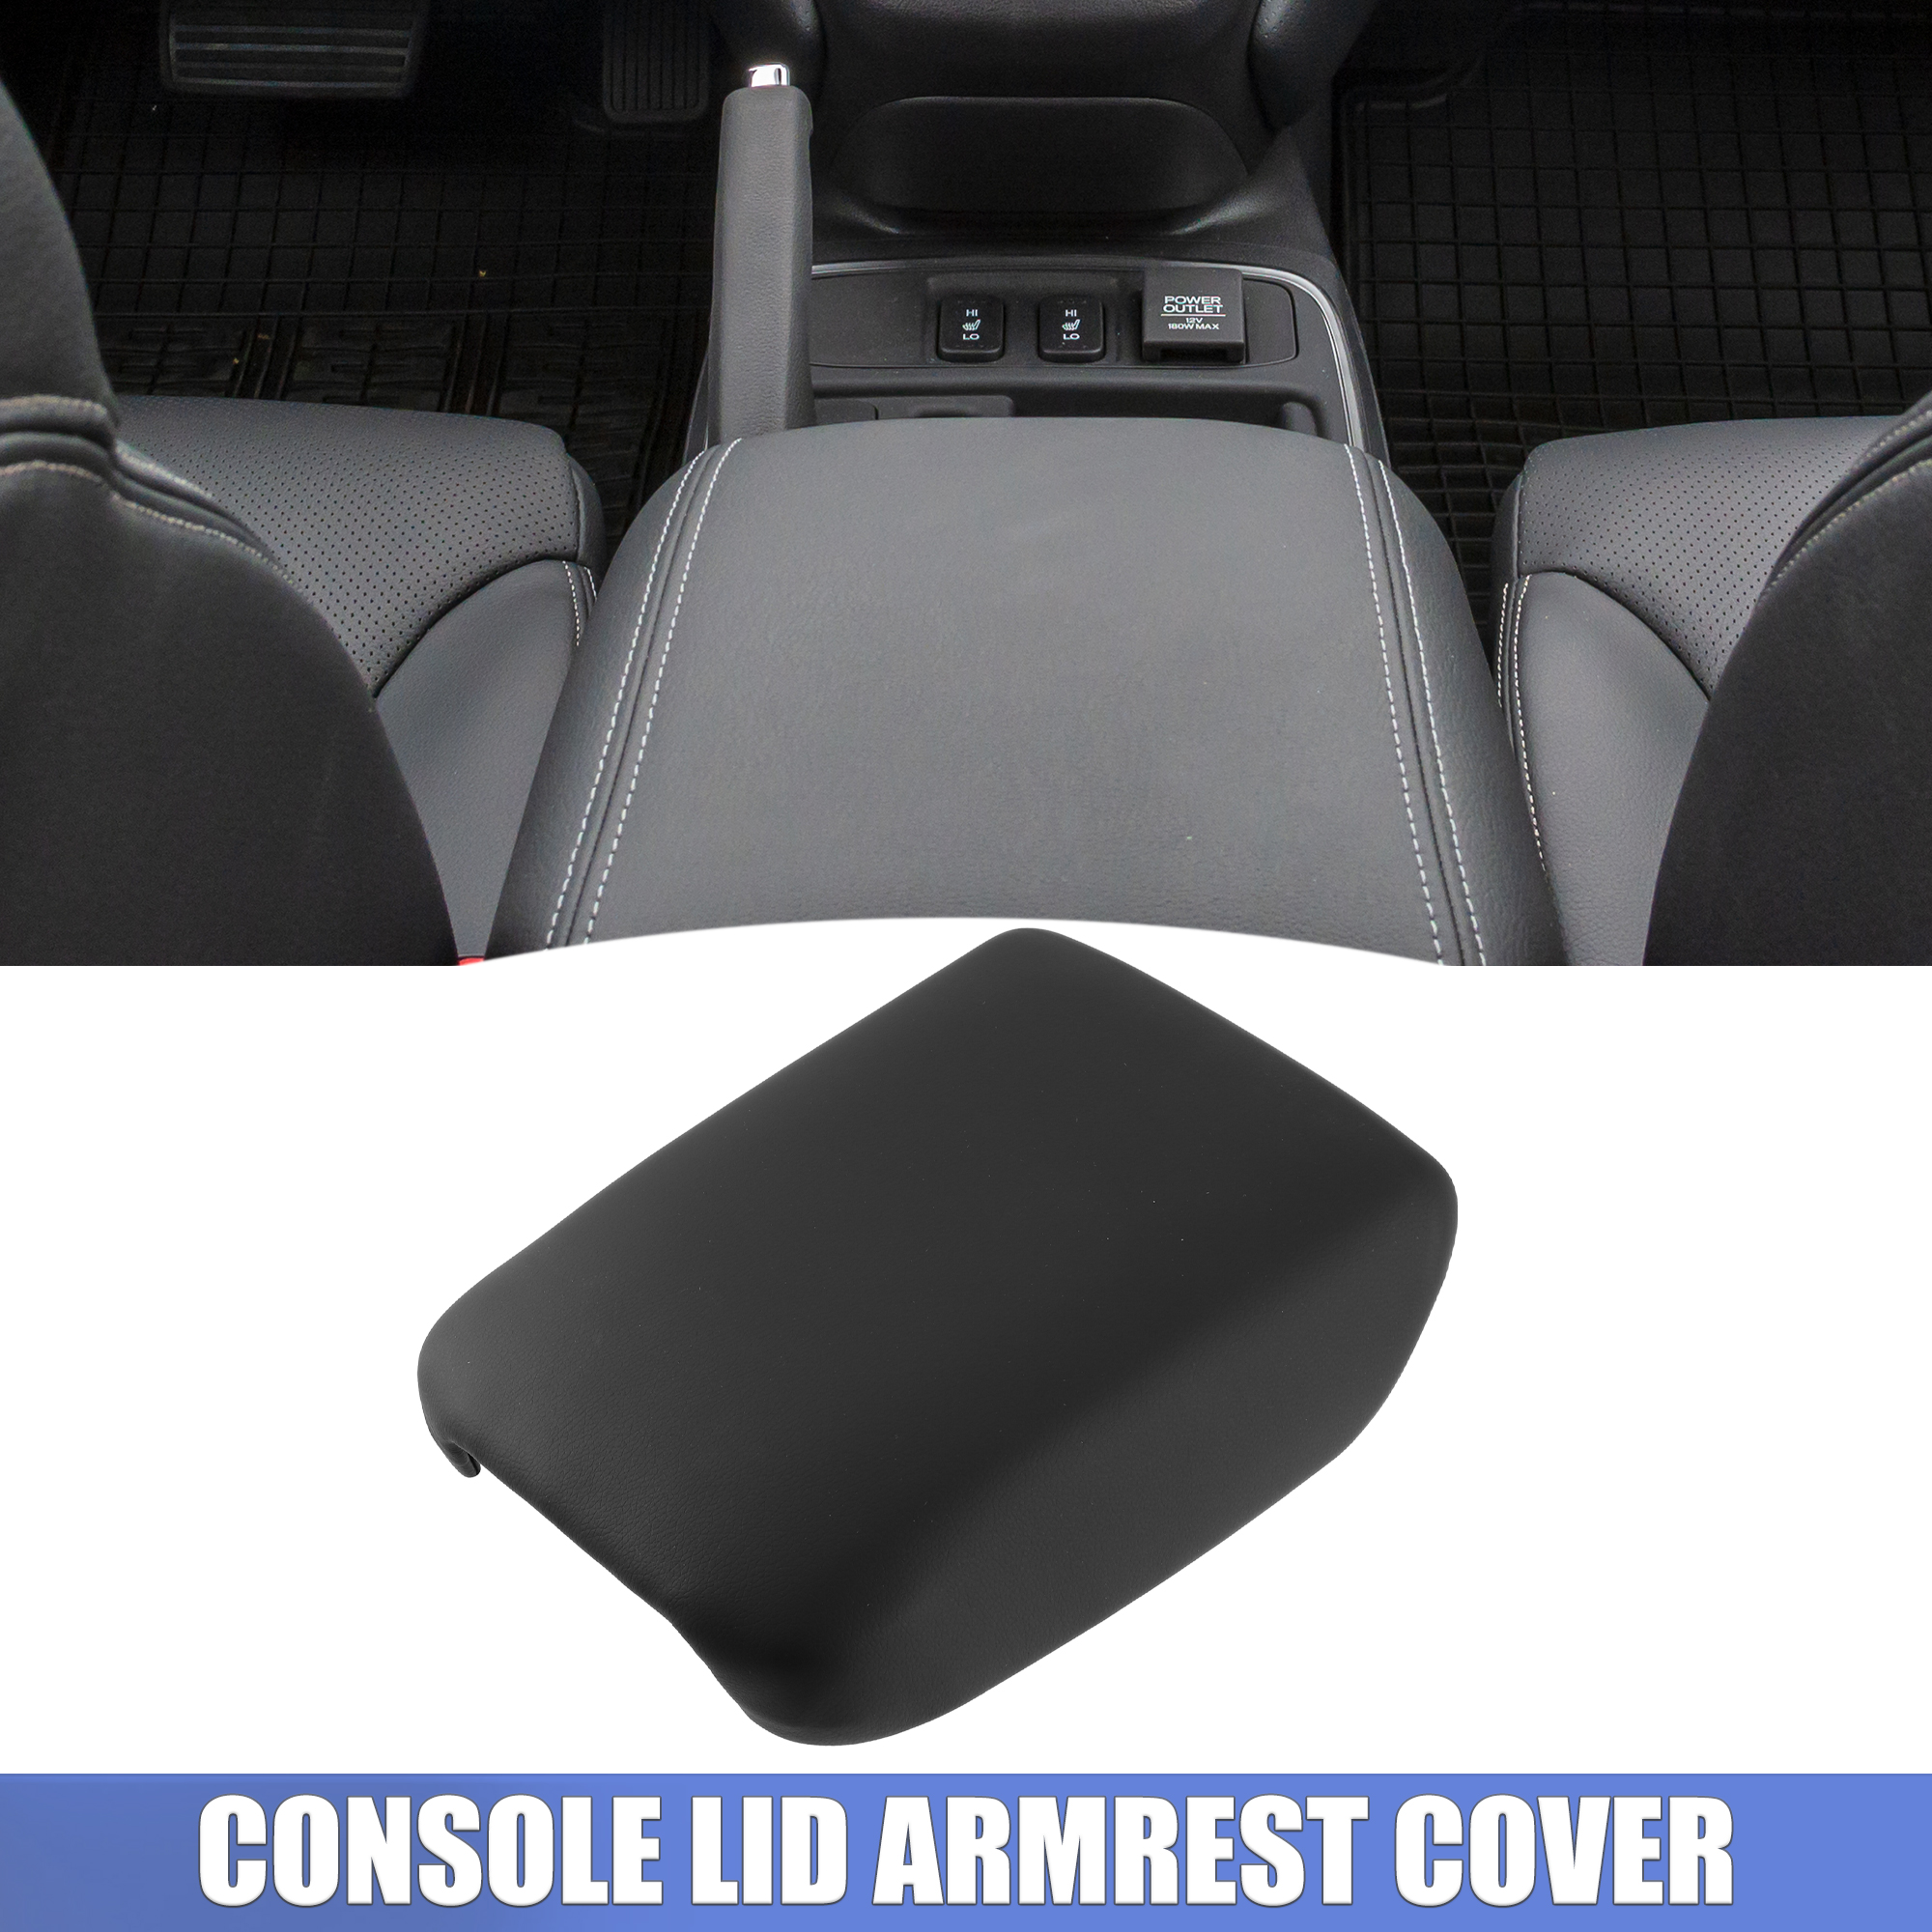 Unique Bargains Car Console Lid Armrest Cover for Honda CRV 2012-2016 Armrest Cover Pad Black